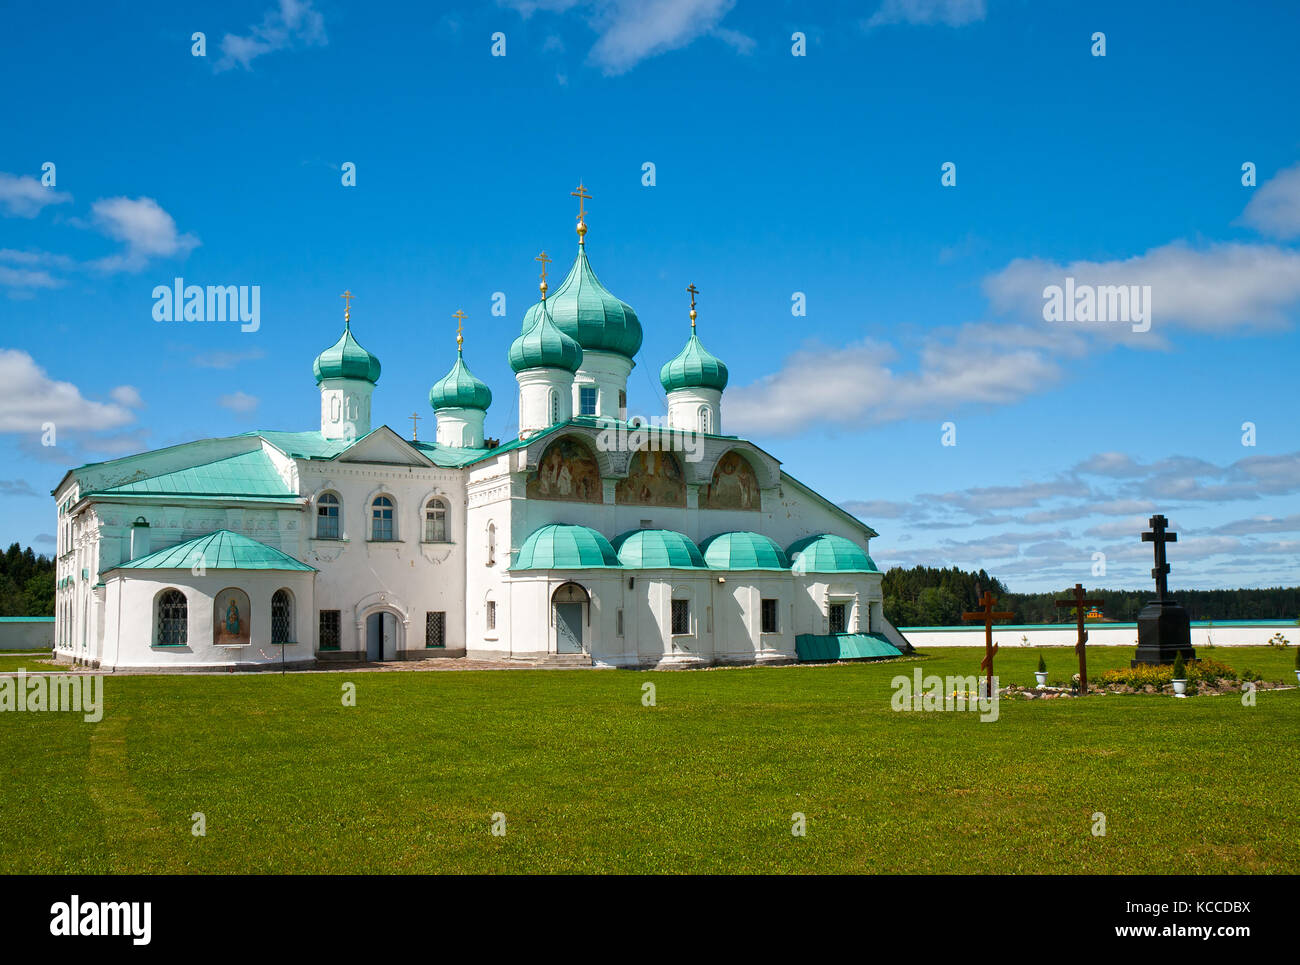 Chiesa russo-ortodossa Alexander-svirsky monastero, Russia Foto Stock